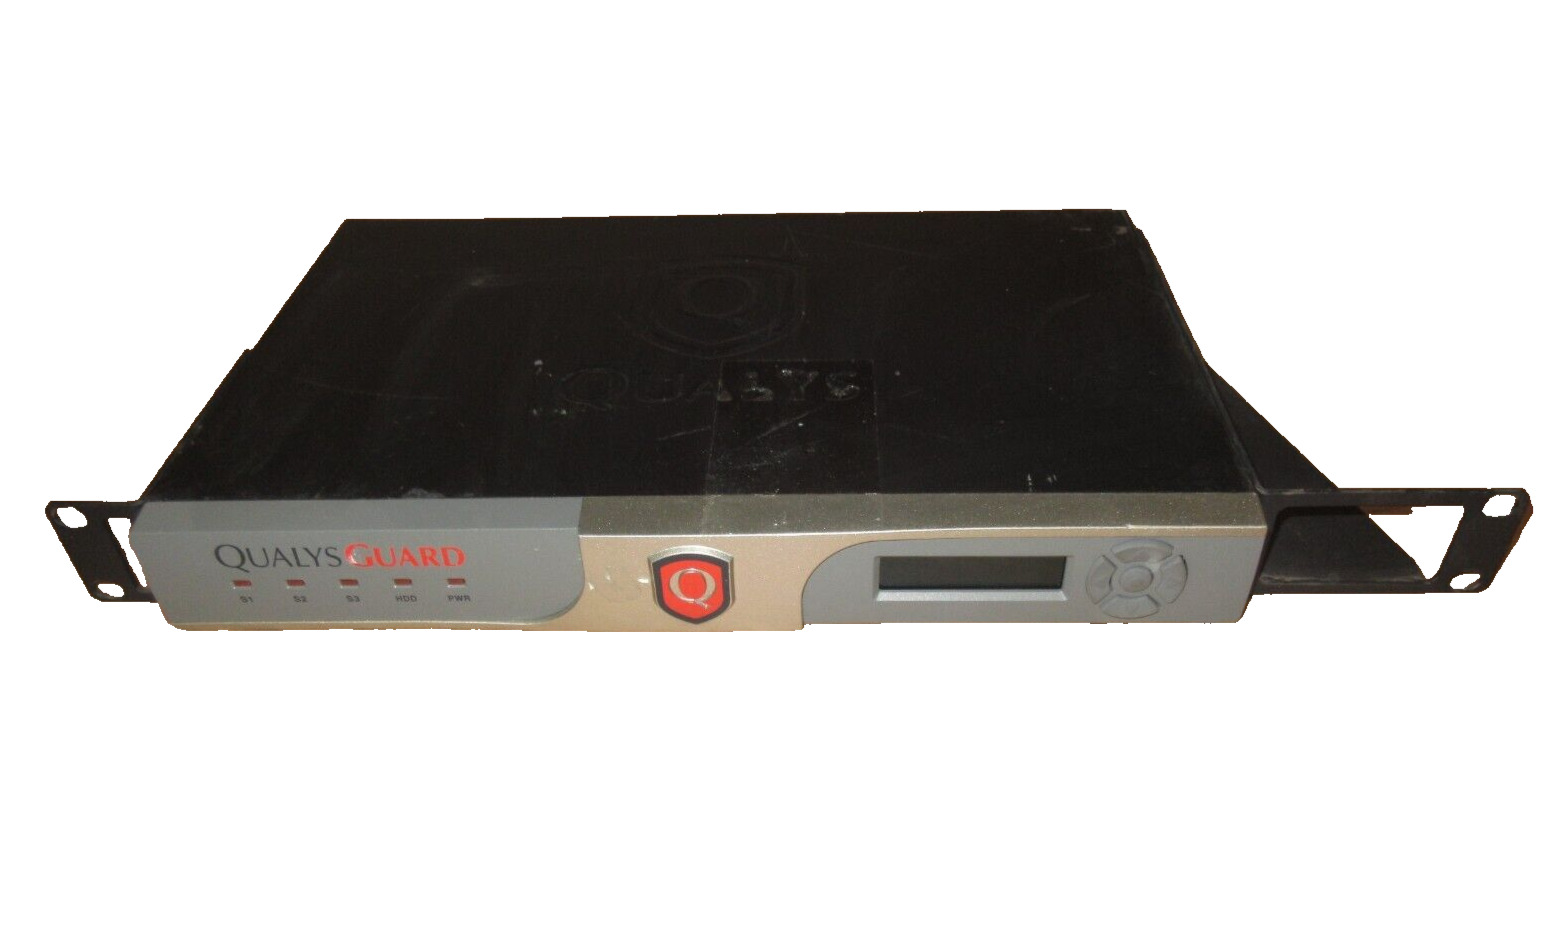 QUALYS QGSA-2120-C1 Rack Mountable Firewall Scanner Appliance